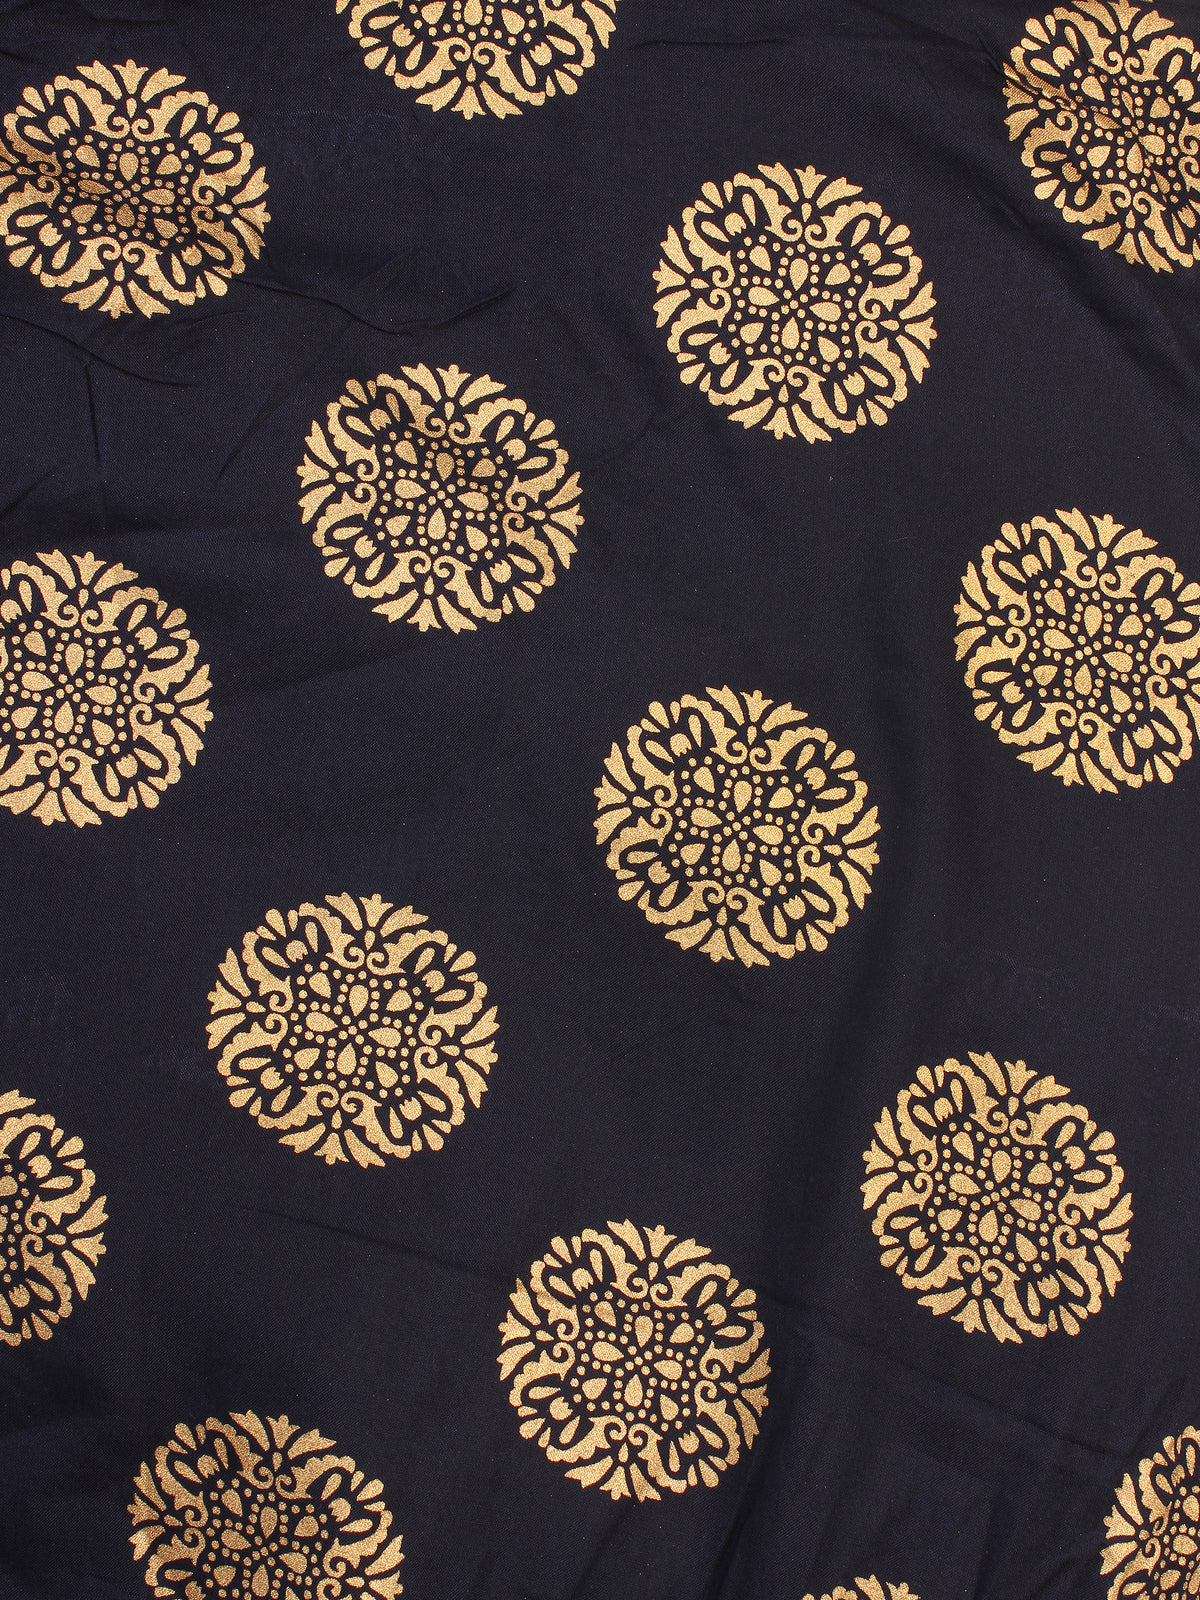 Blue Gold Block Printed Cotton Fabric Per Meter - F001F2200